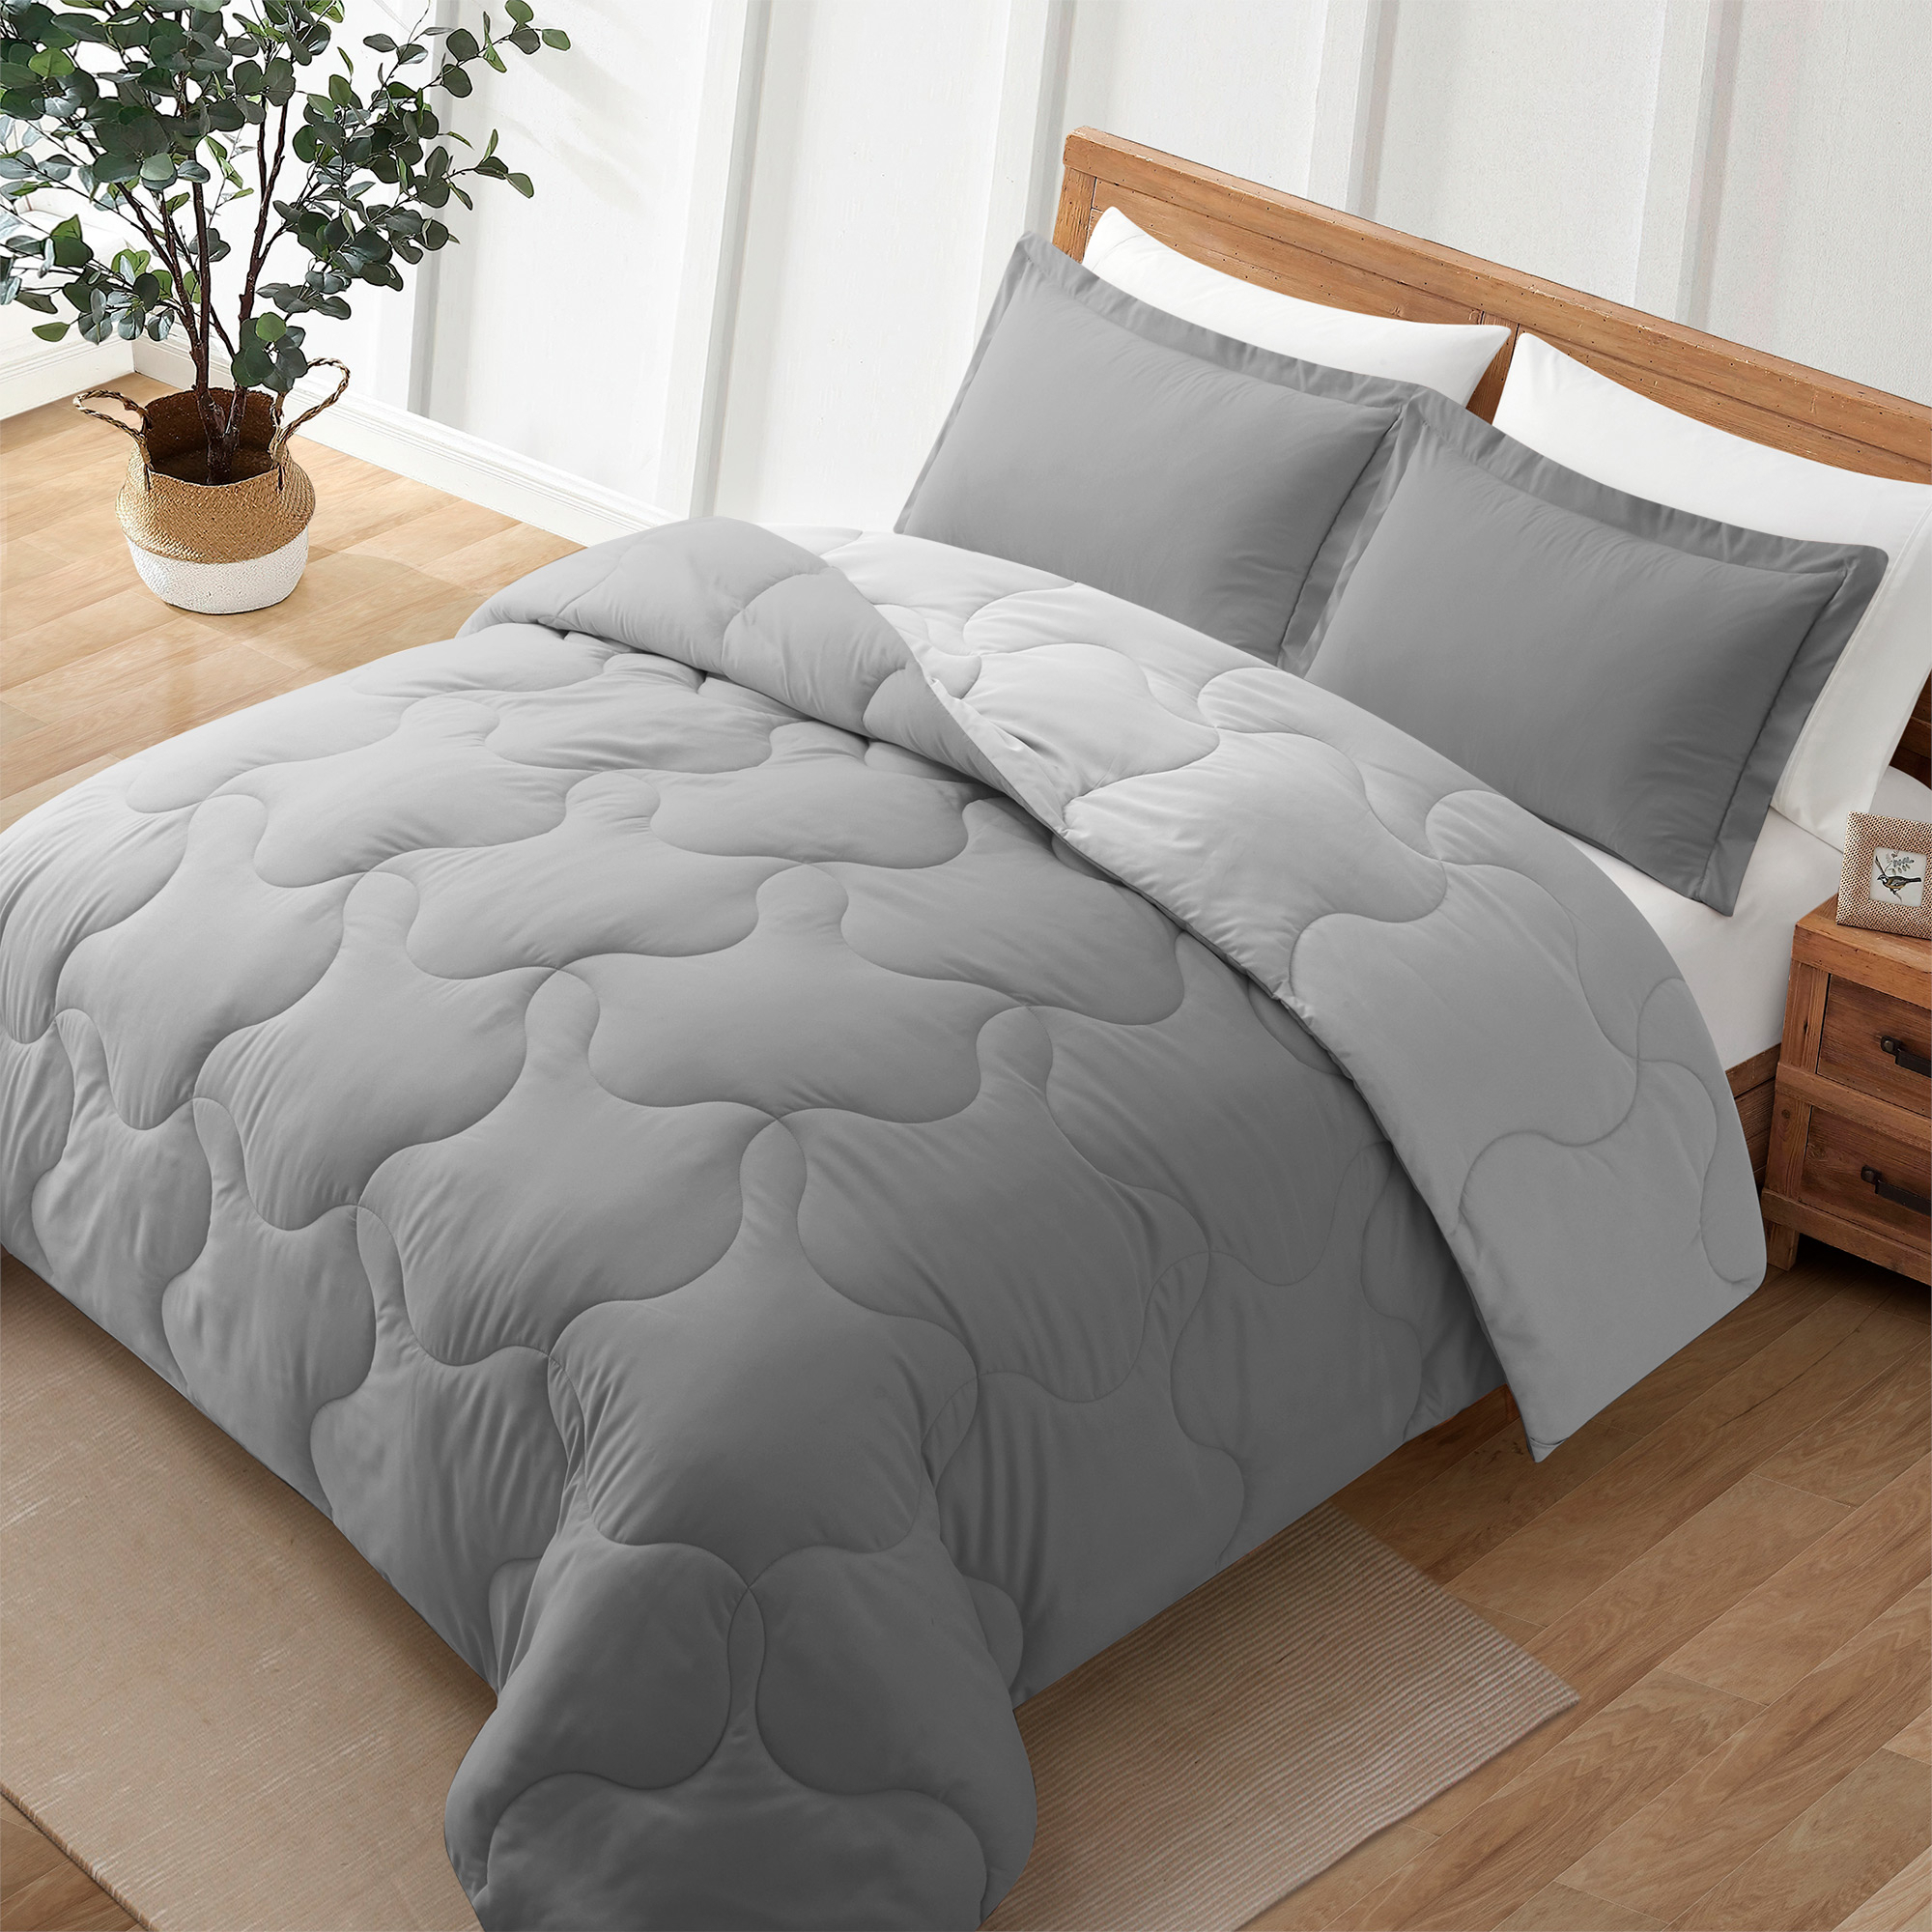 Lightweight Reversible Microfiber Down Alternative Comforter Set, Dark Gray&Light Gray, King